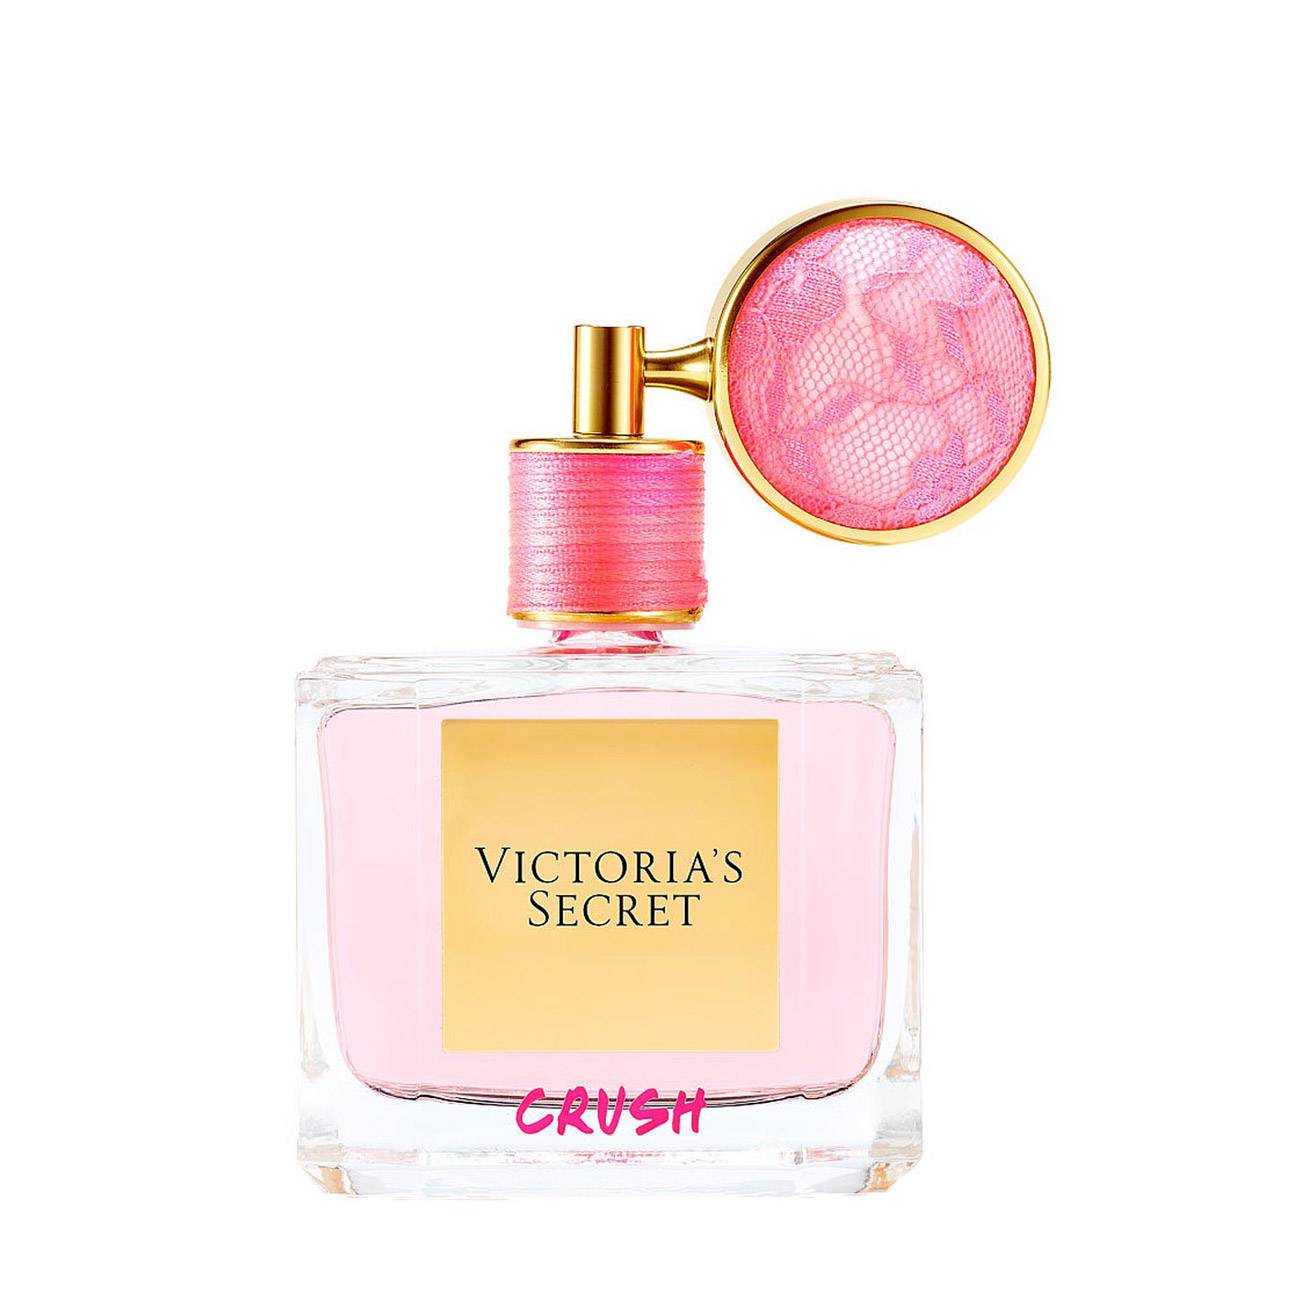 Apa de Parfum Victoria's Secret CRUSH 100ml cu comanda online